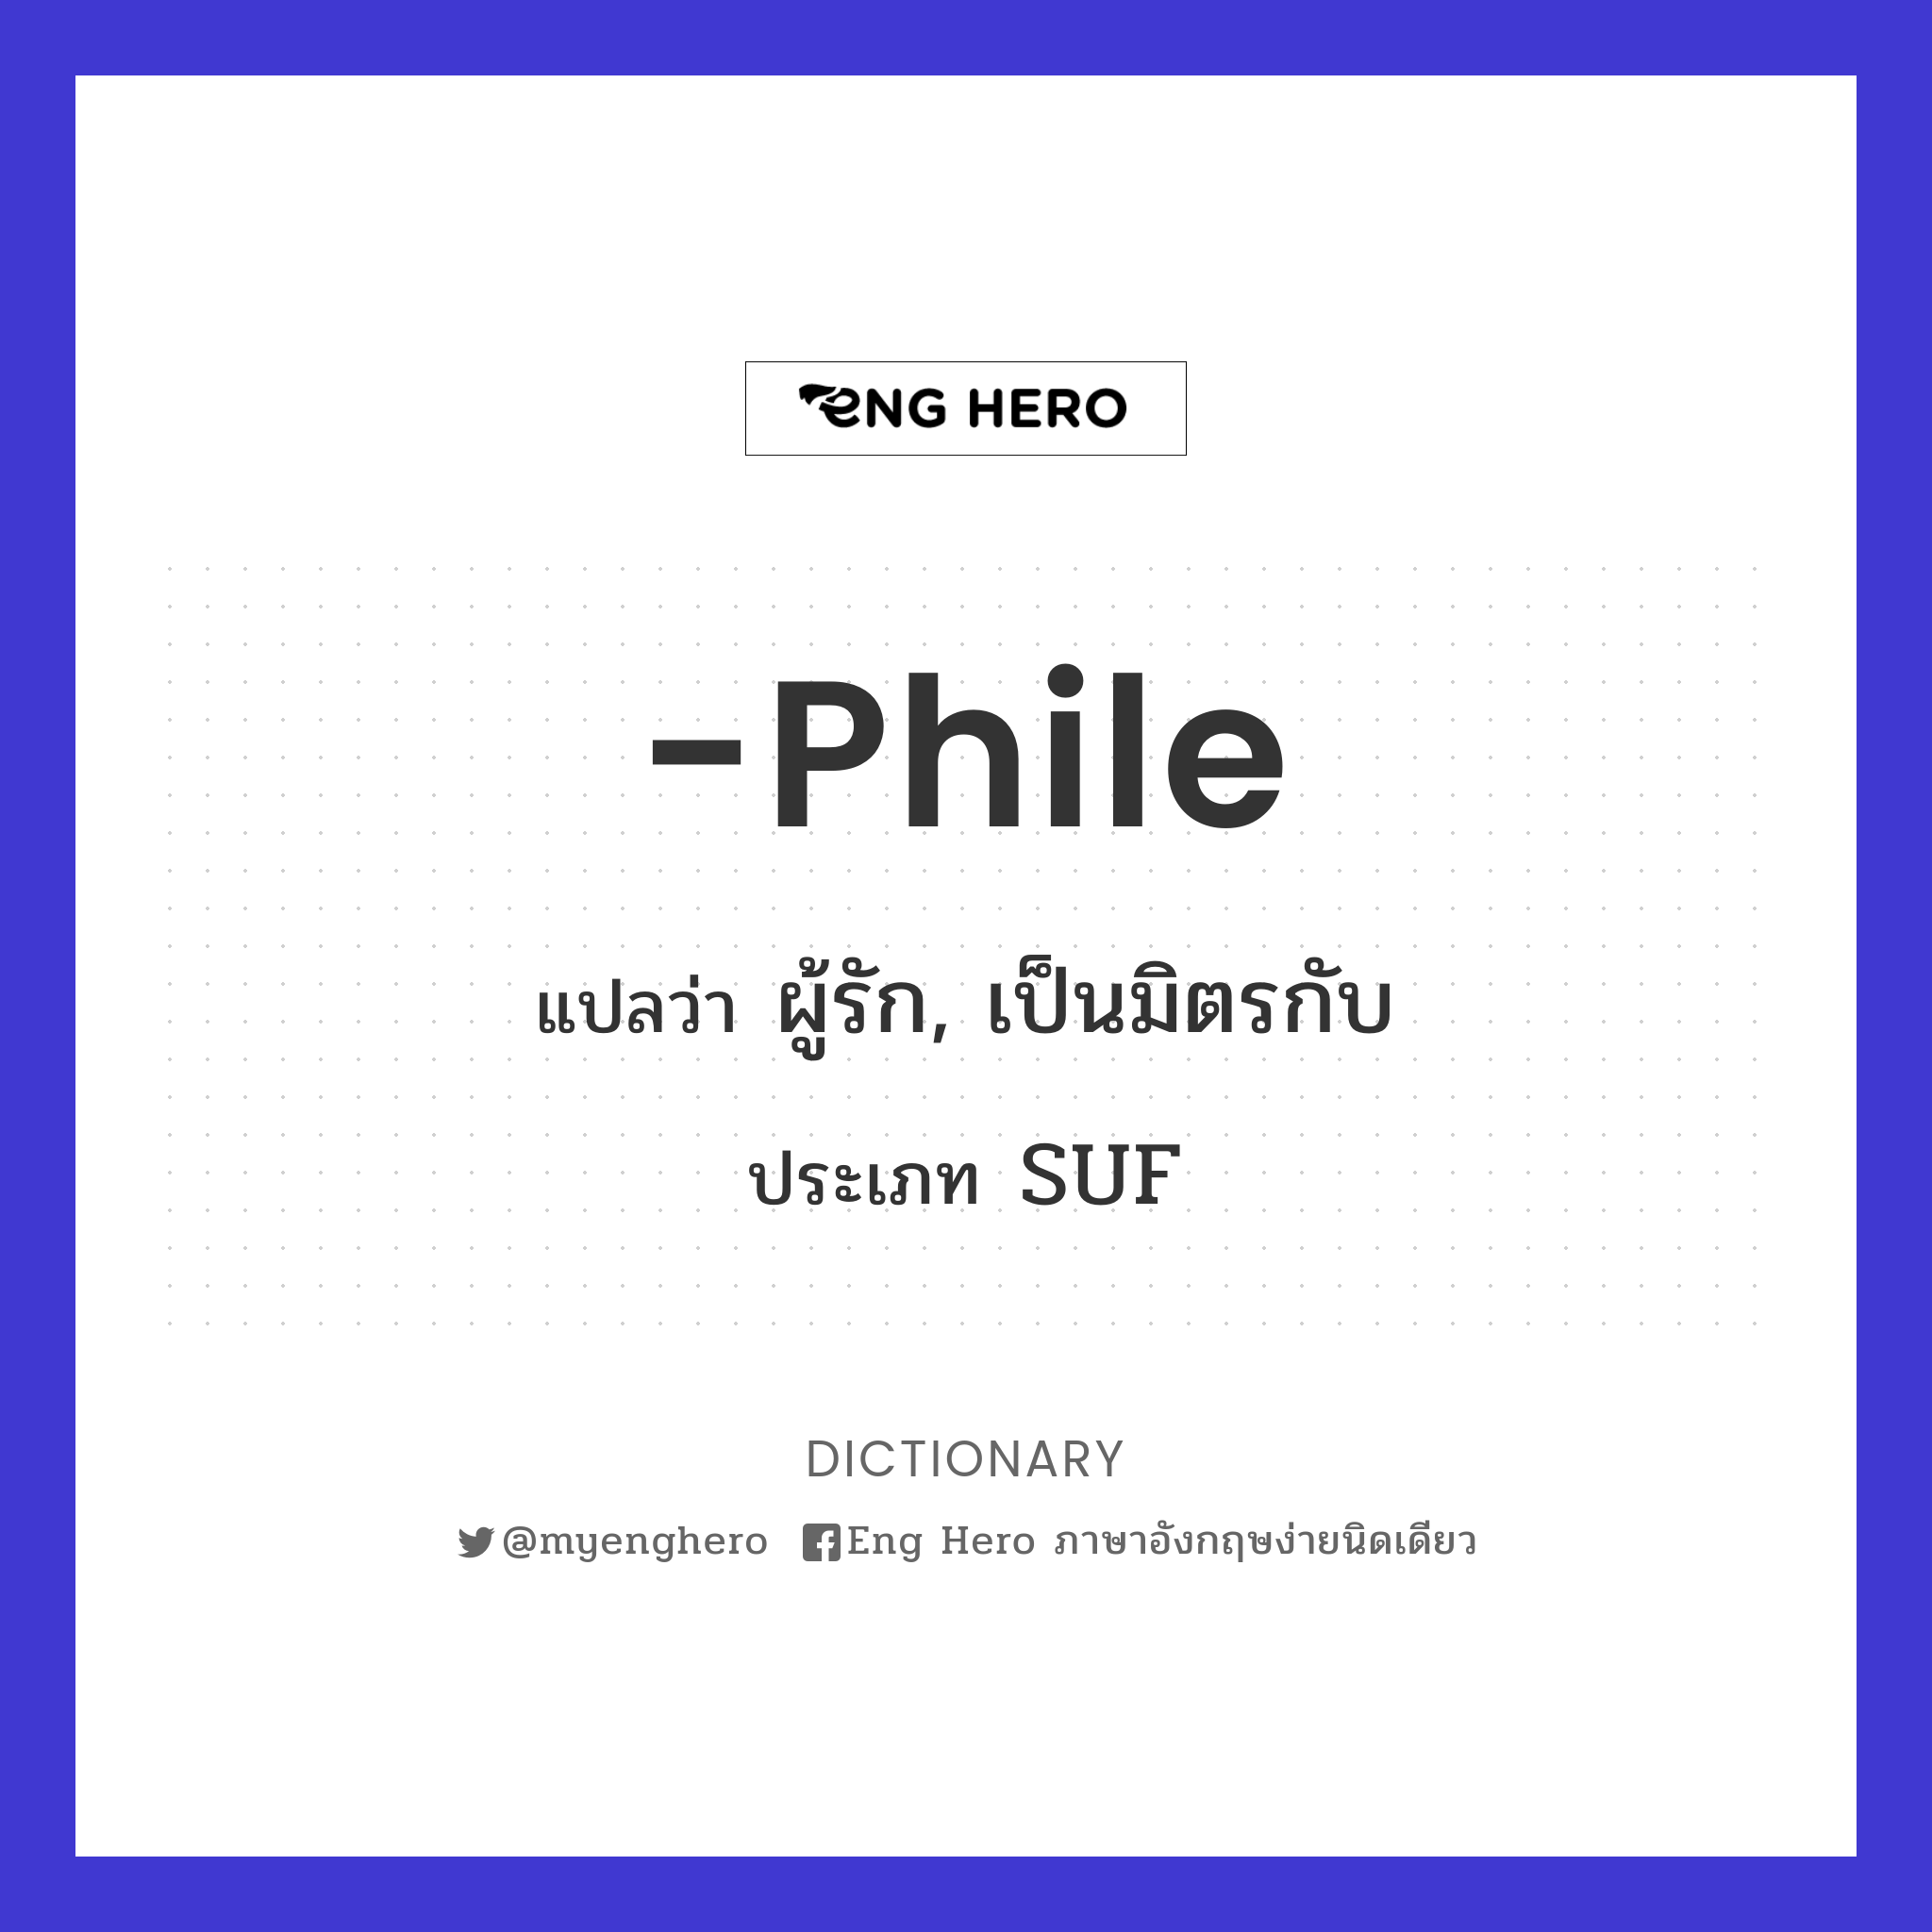 -phile